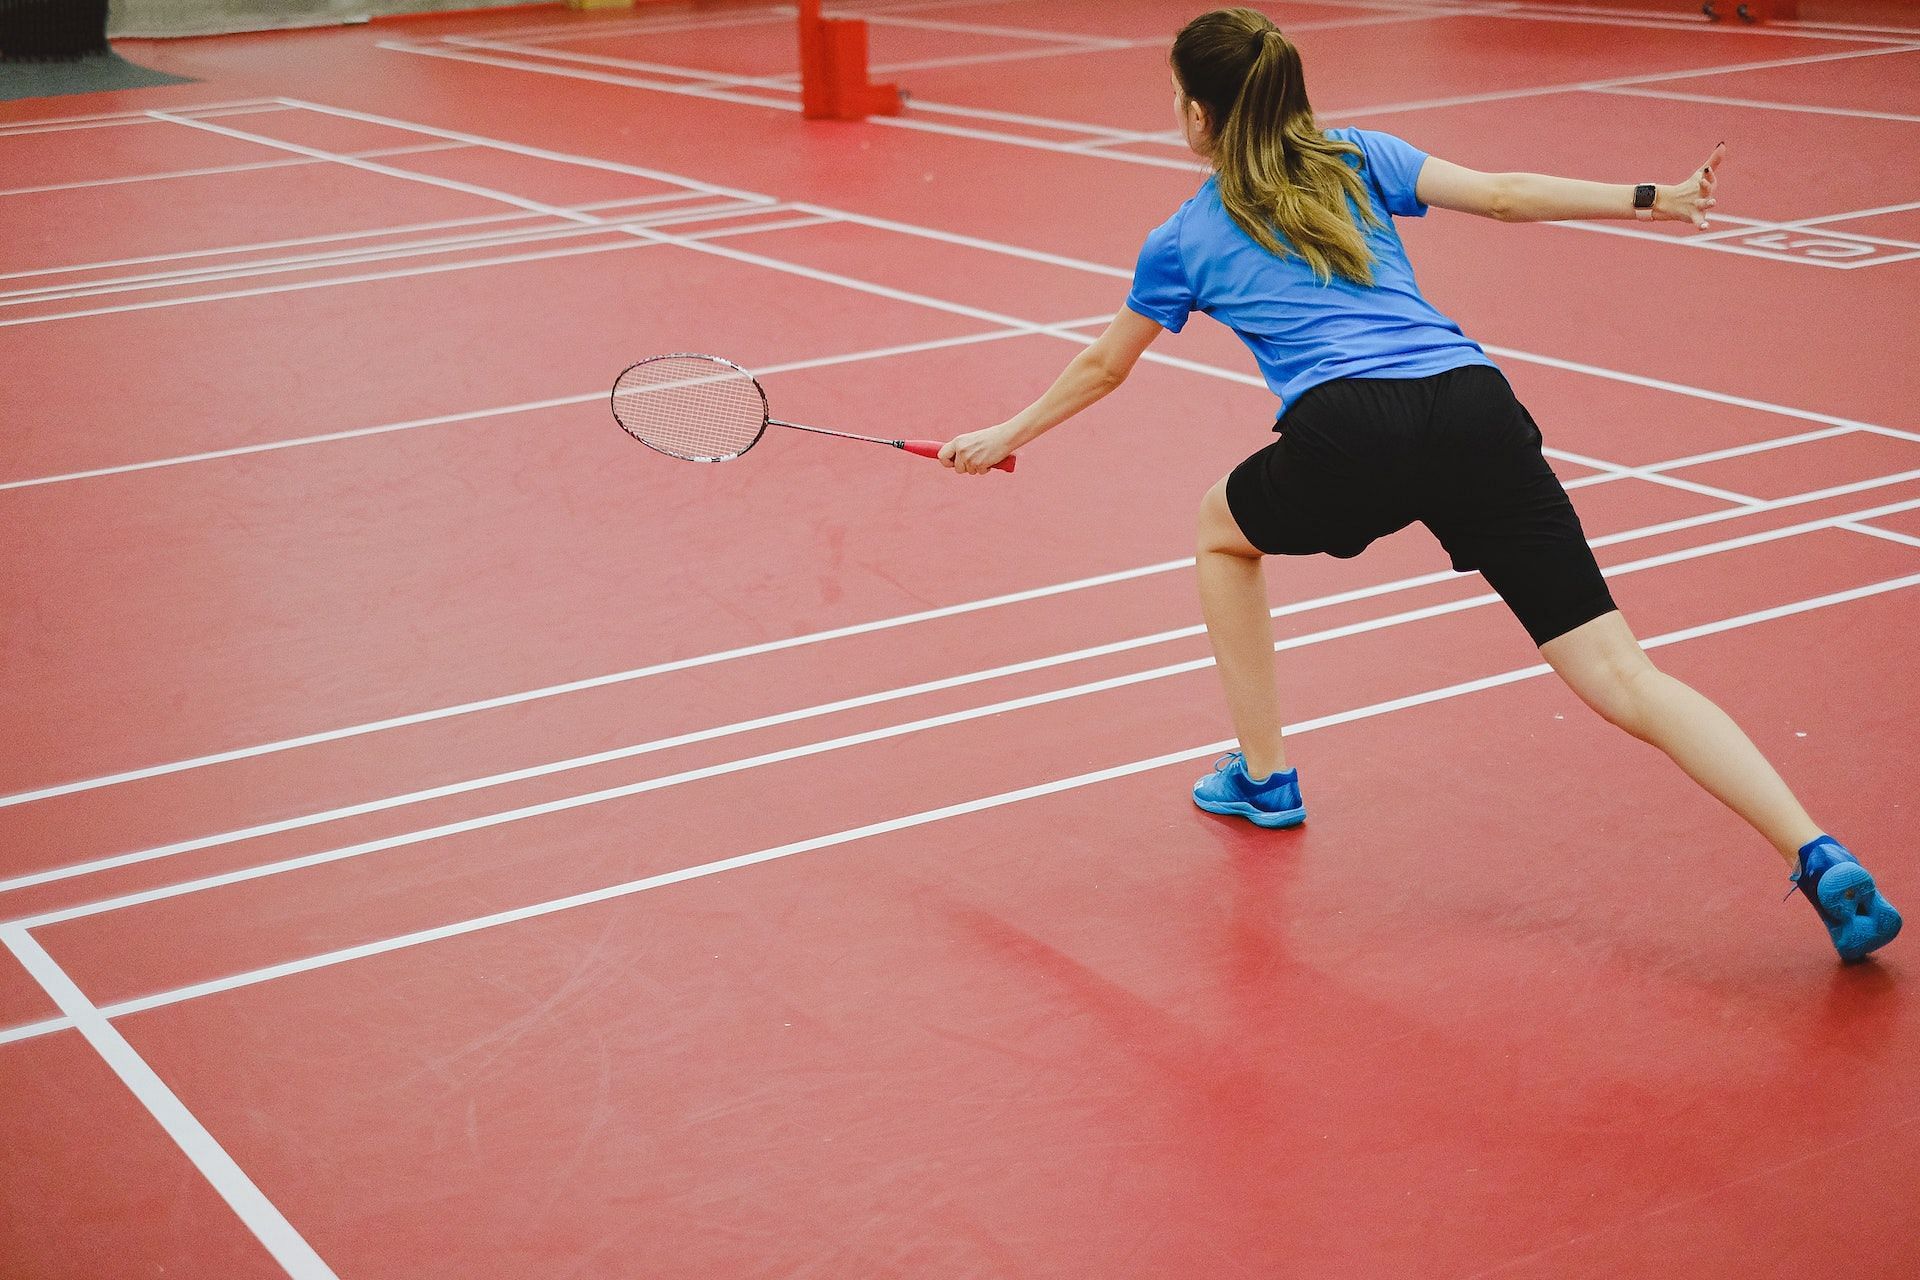 Sports like badminton requires agility training. (Photo via Pexels/SHVETS production)